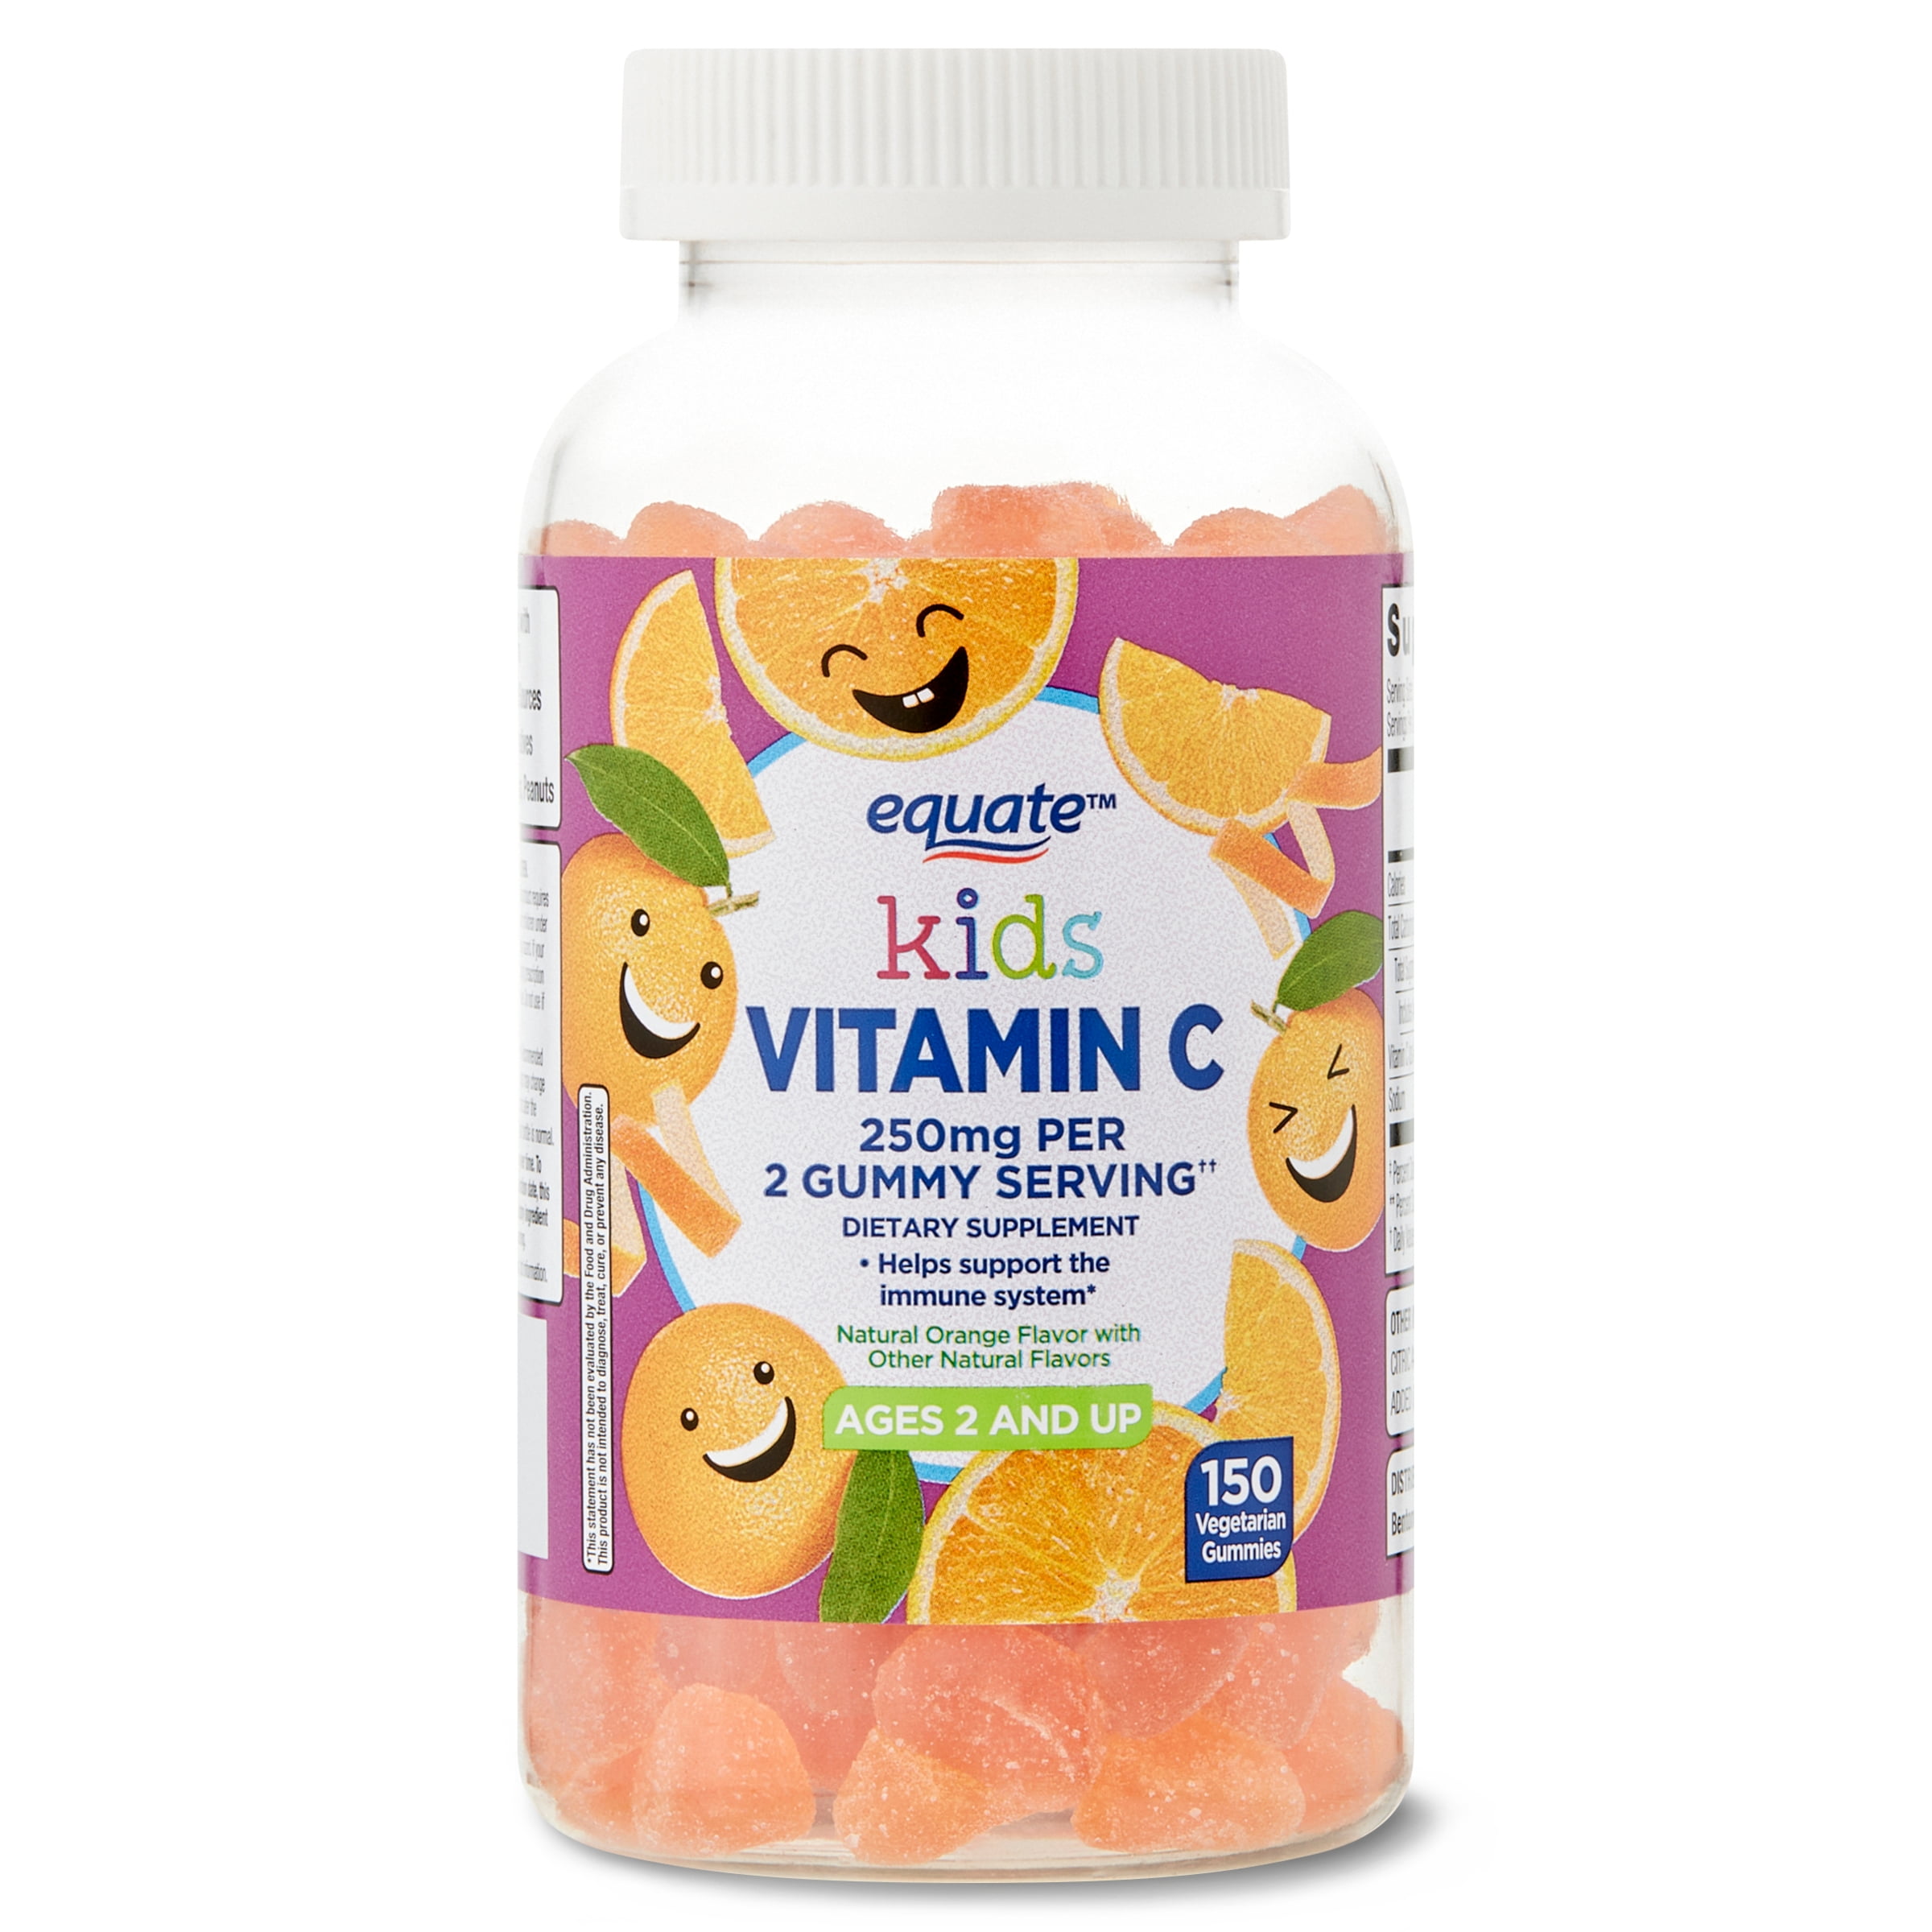 Equate Kids Vitamin C, 250 mg Vegetarian Gummies, 150 Count